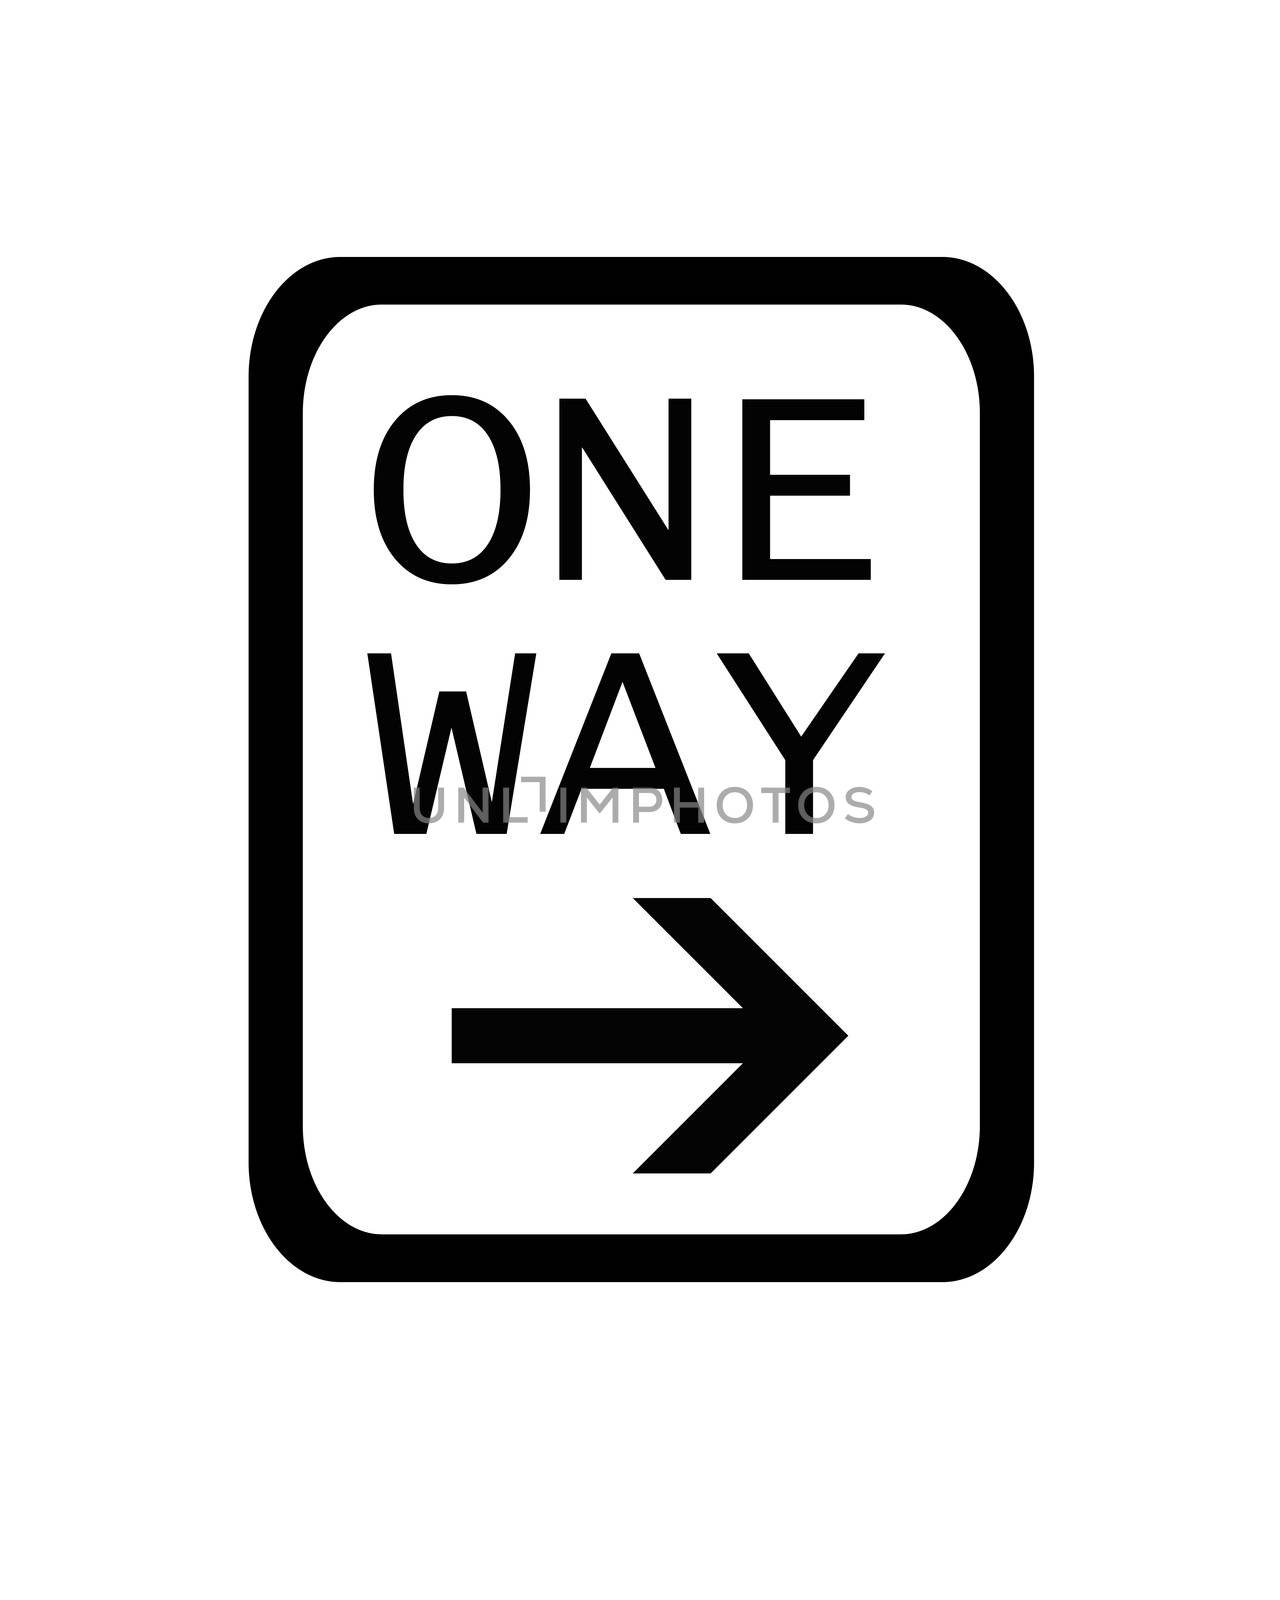 One Way Signpost by sacatani